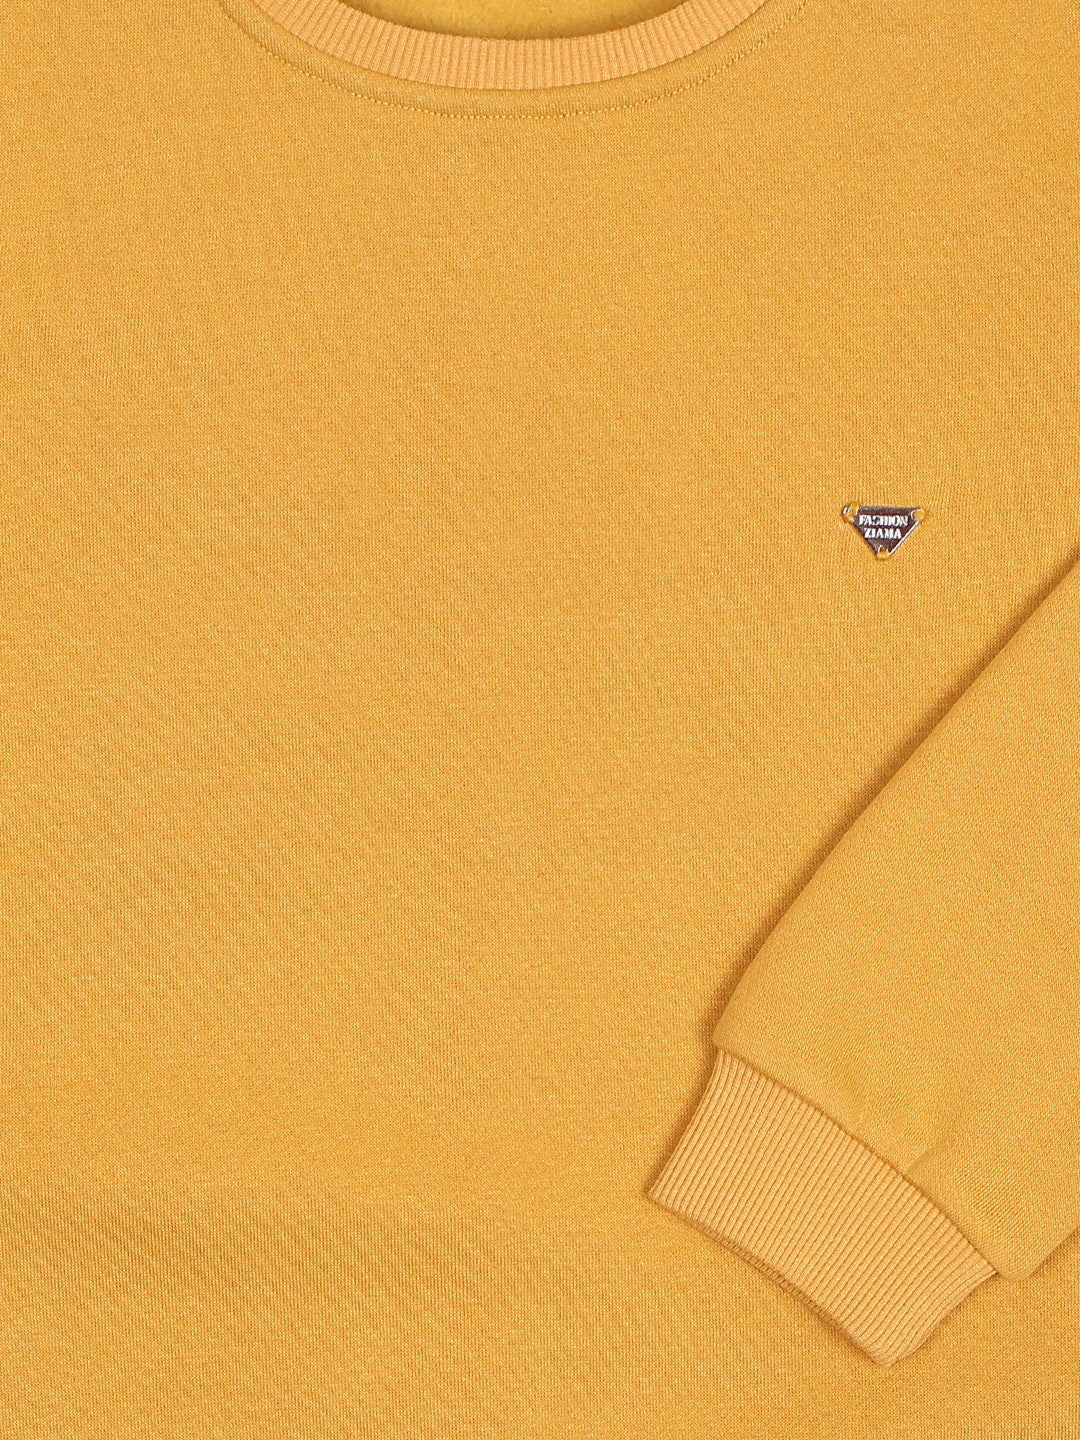 Ziama Girls Solid Sweatshirt-Mustard